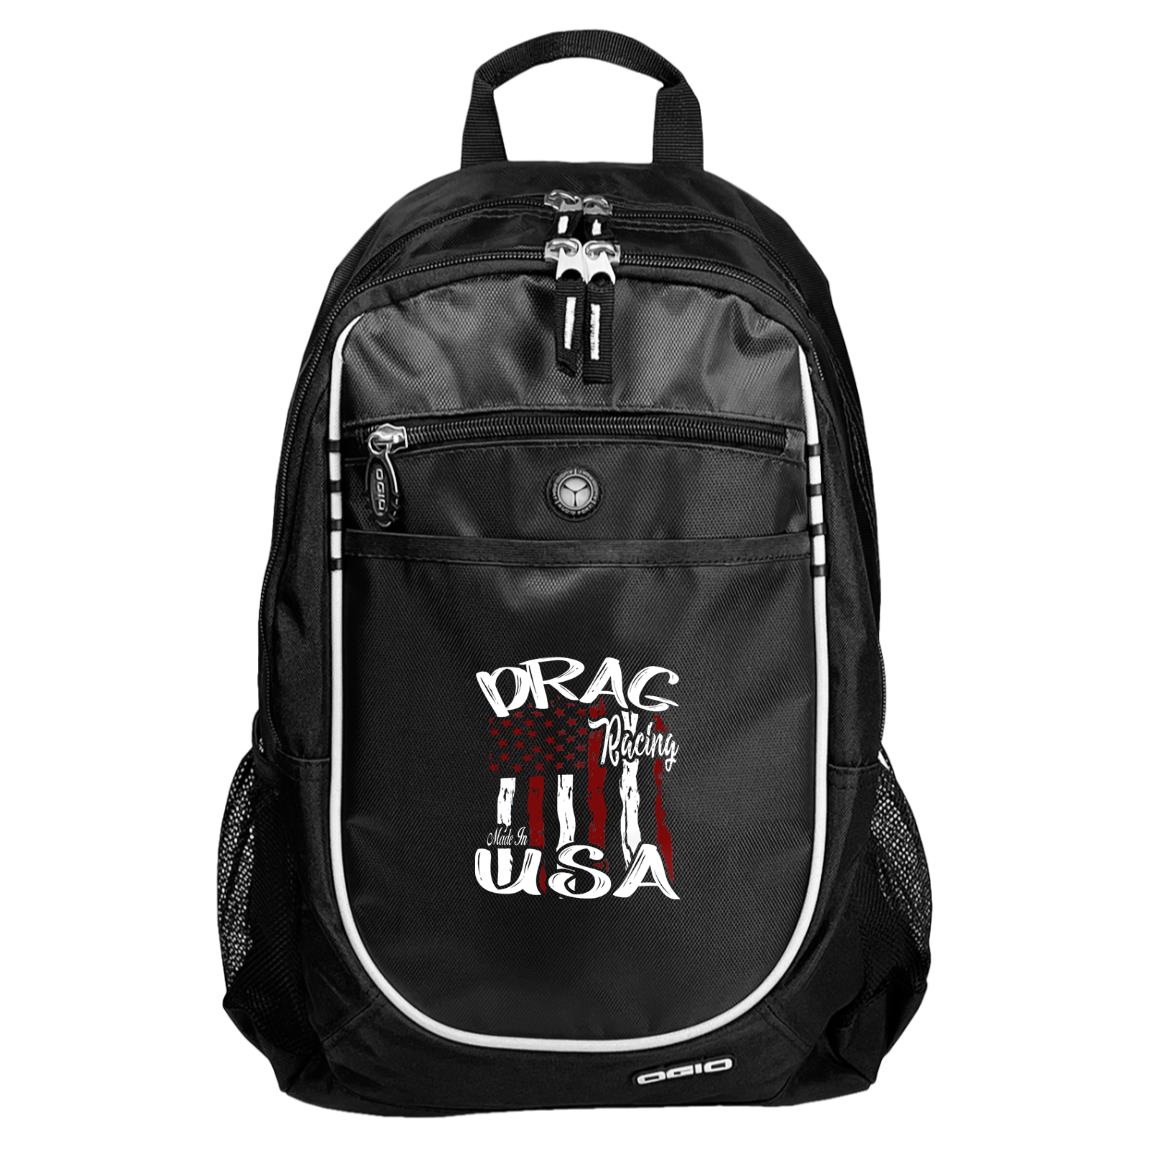 Drag Racing Made In USA Rugged Bookbag